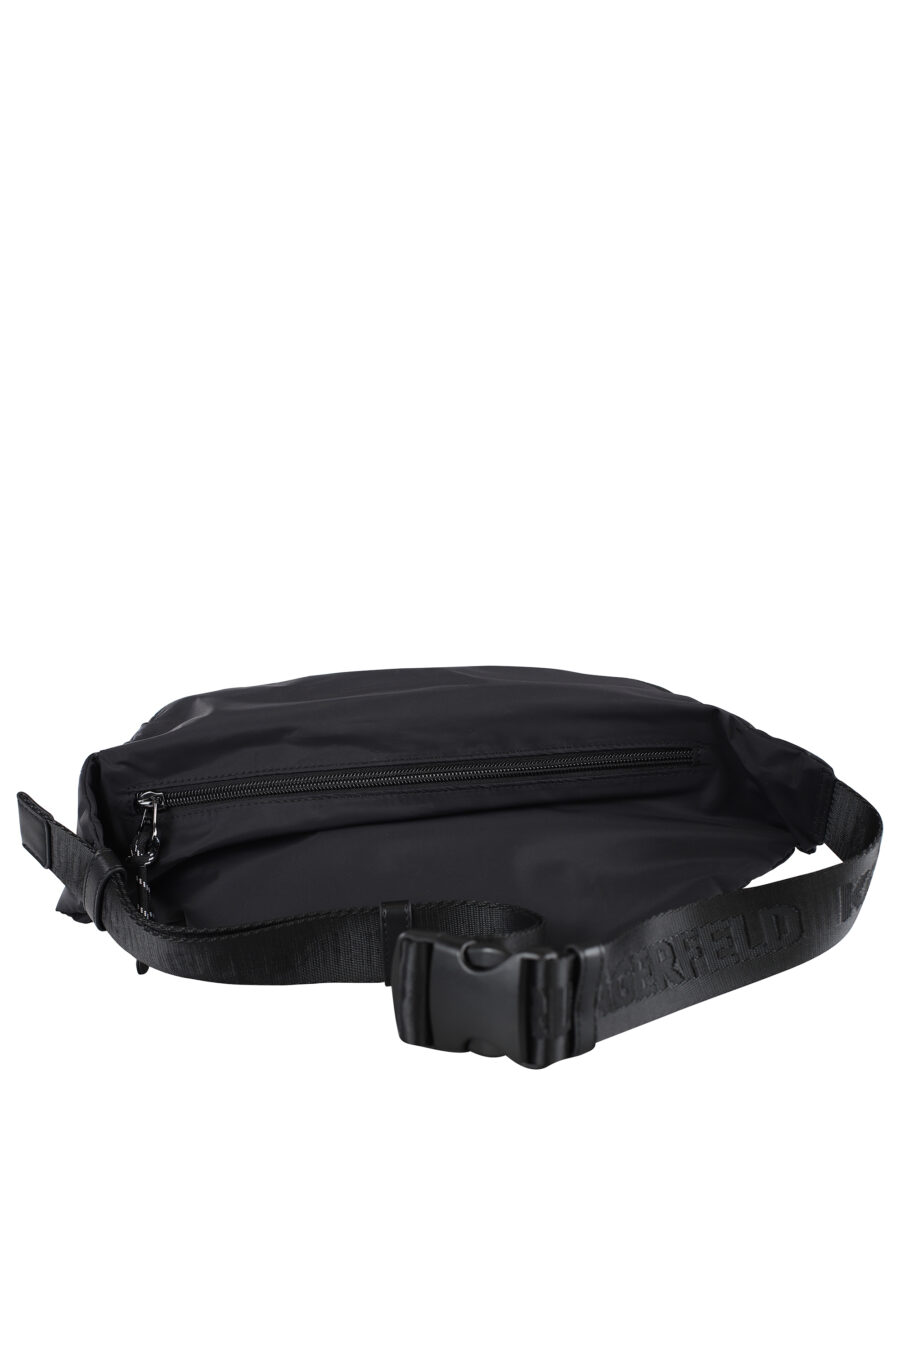 Bum bag black with white mini logo - IMG 6973